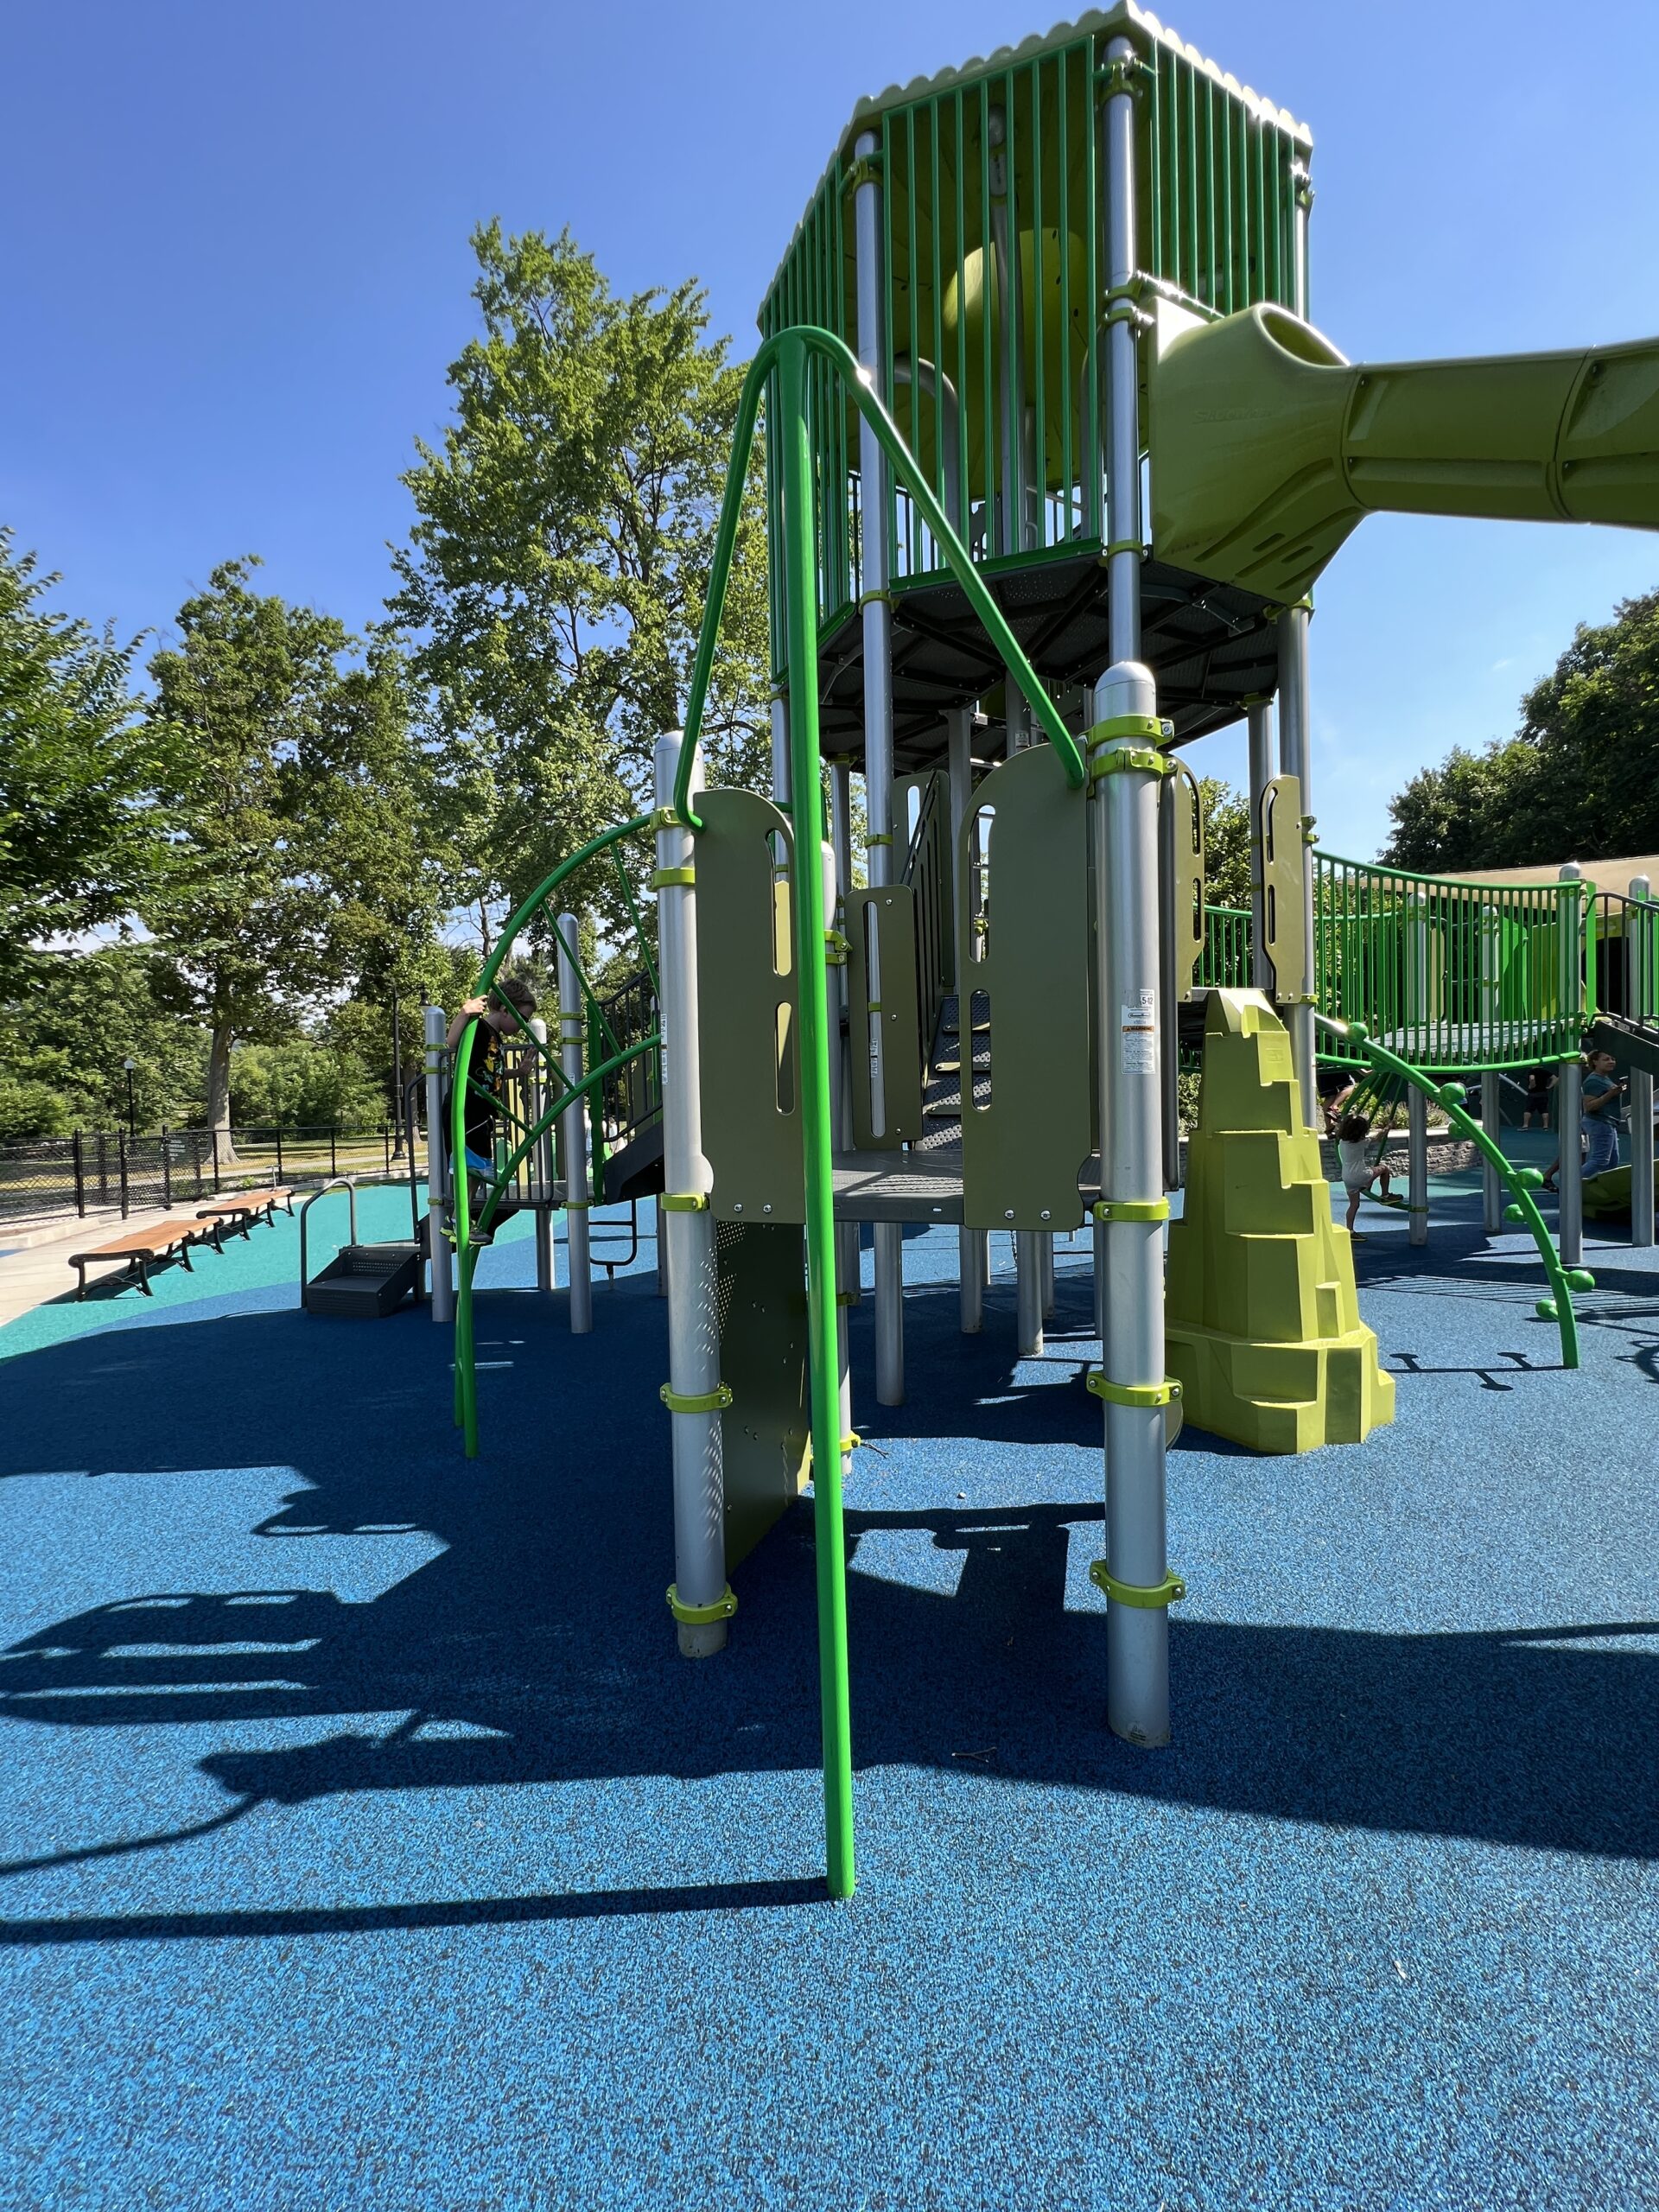 Verona Park Playground in Verona NJ - Features - Fireman's Pole